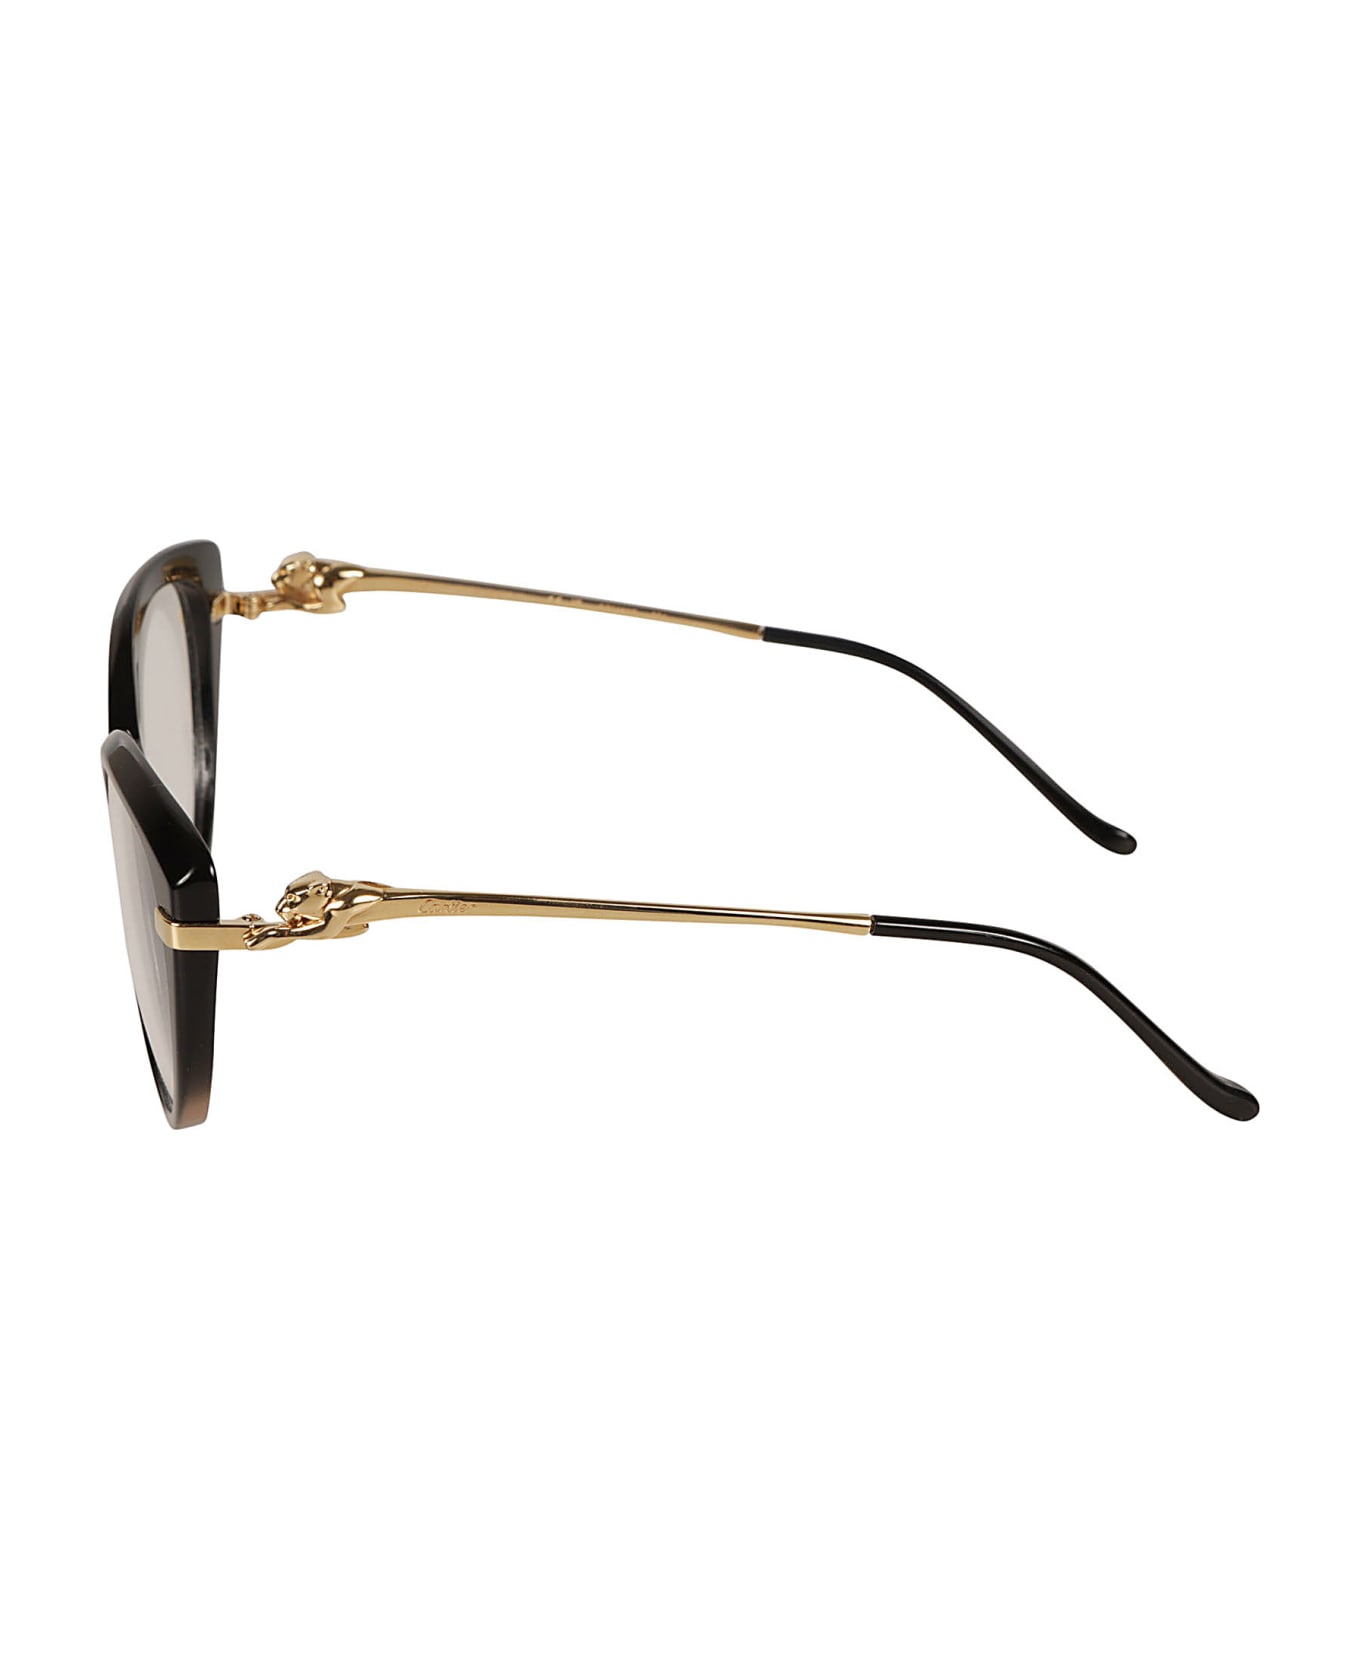 Cartier Eyewear Round Cat-eye Sunglasses Sunglasses - black-gold